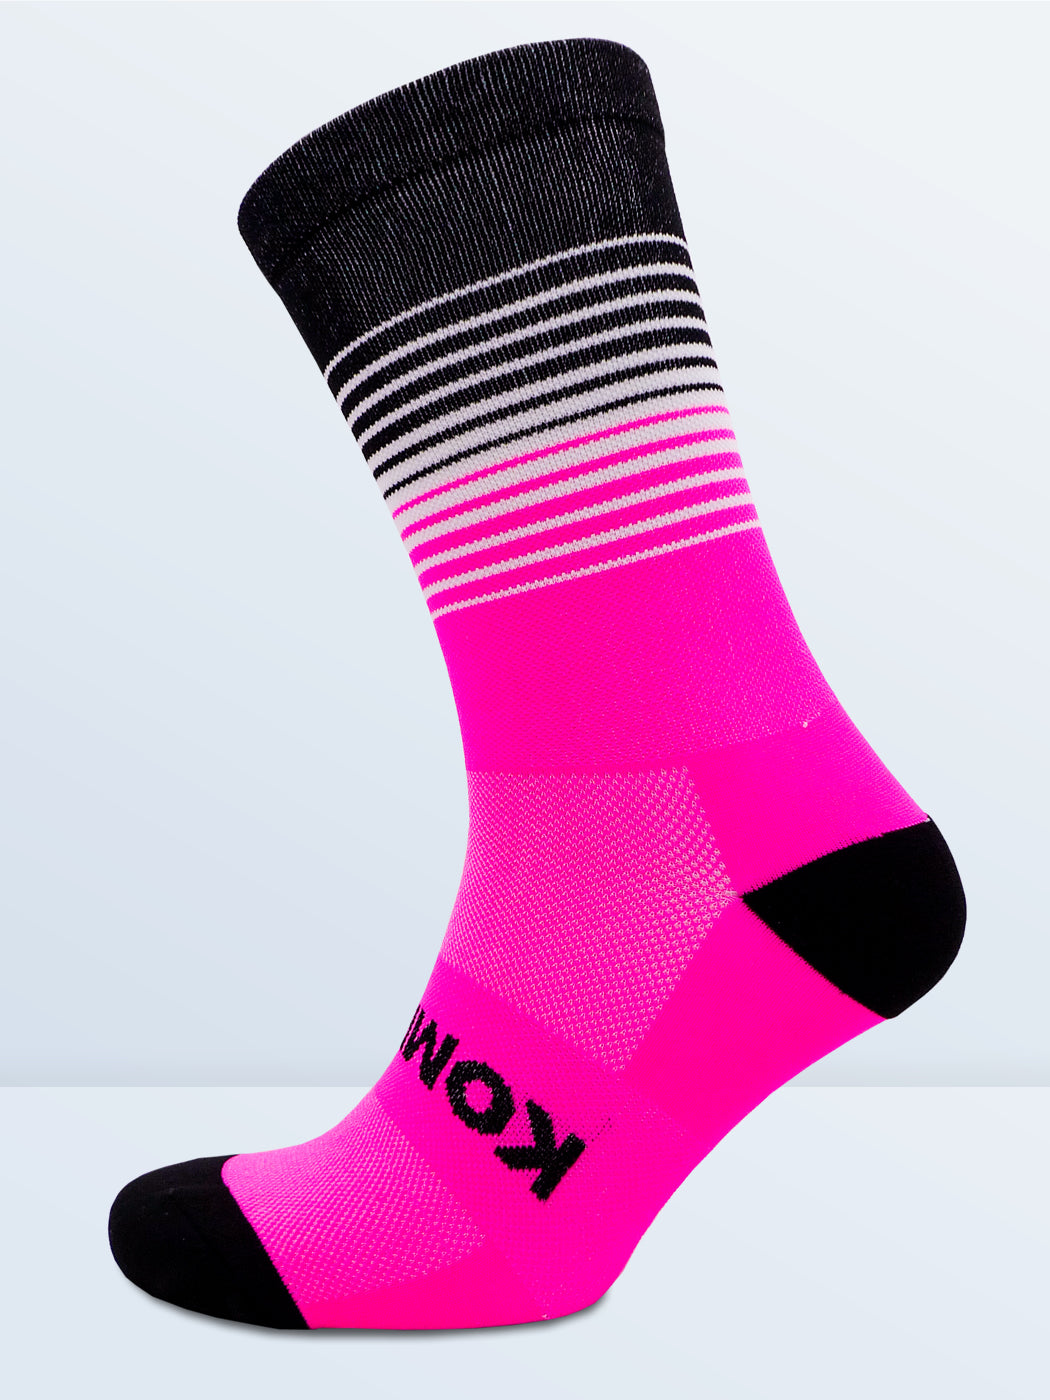 Swagger Socks - Fluro Pink & Black